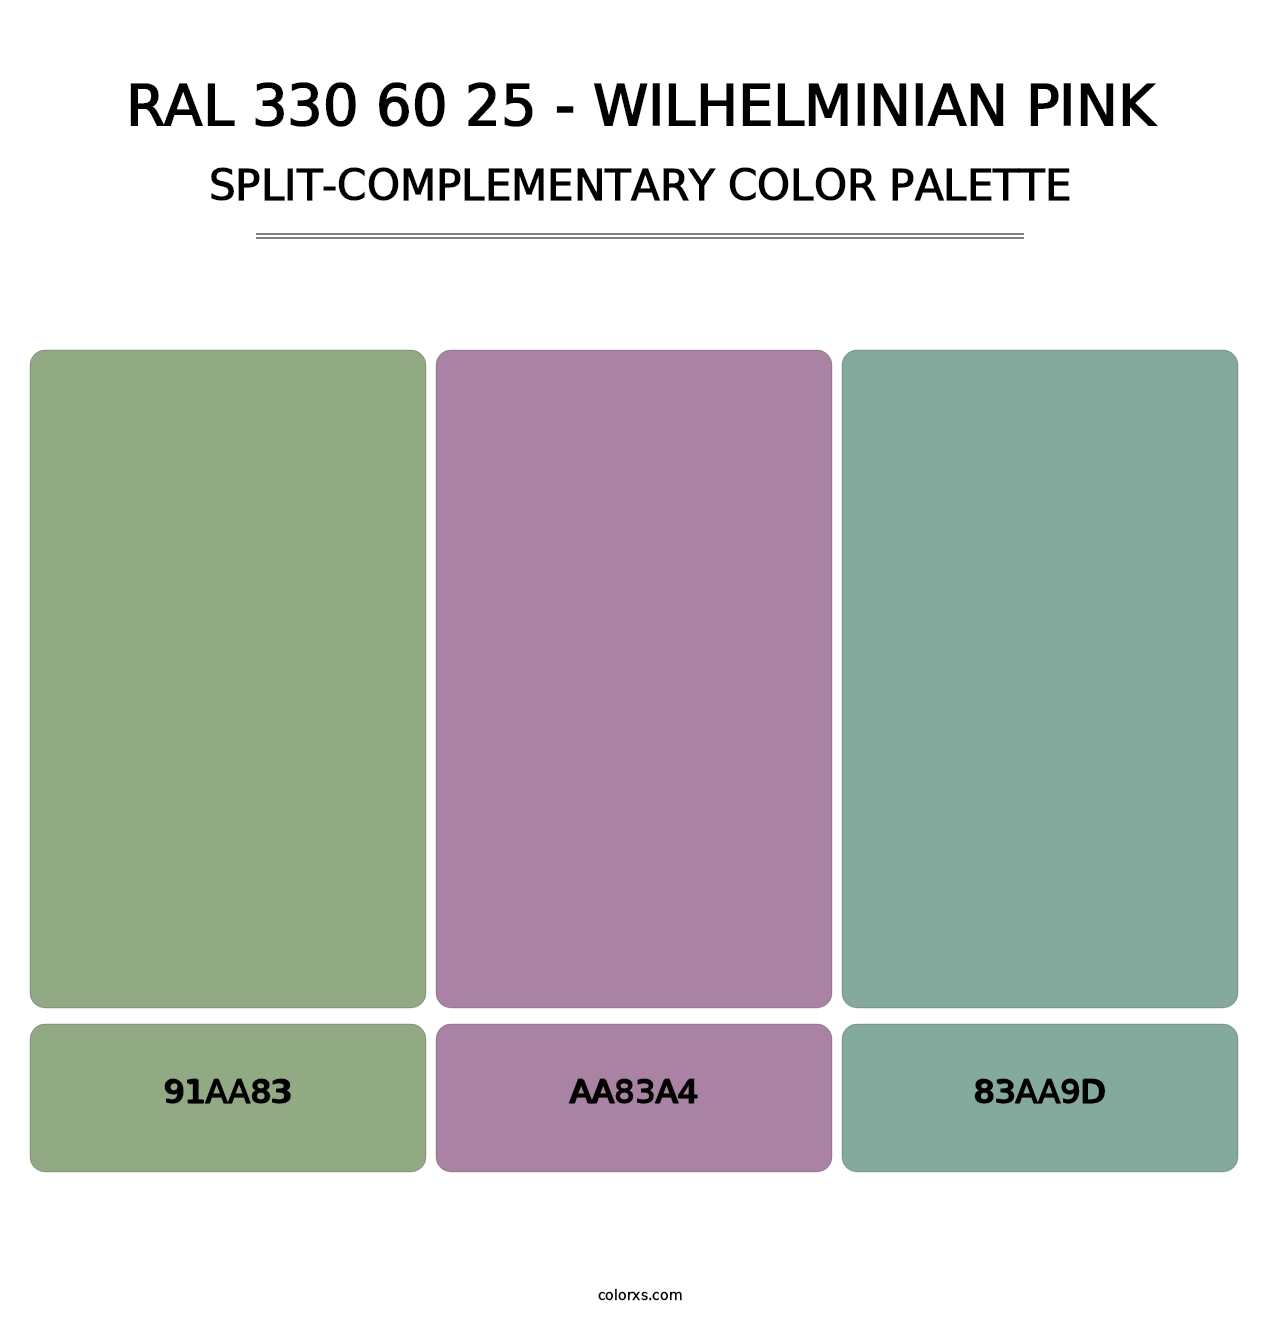 RAL 330 60 25 - Wilhelminian Pink - Split-Complementary Color Palette